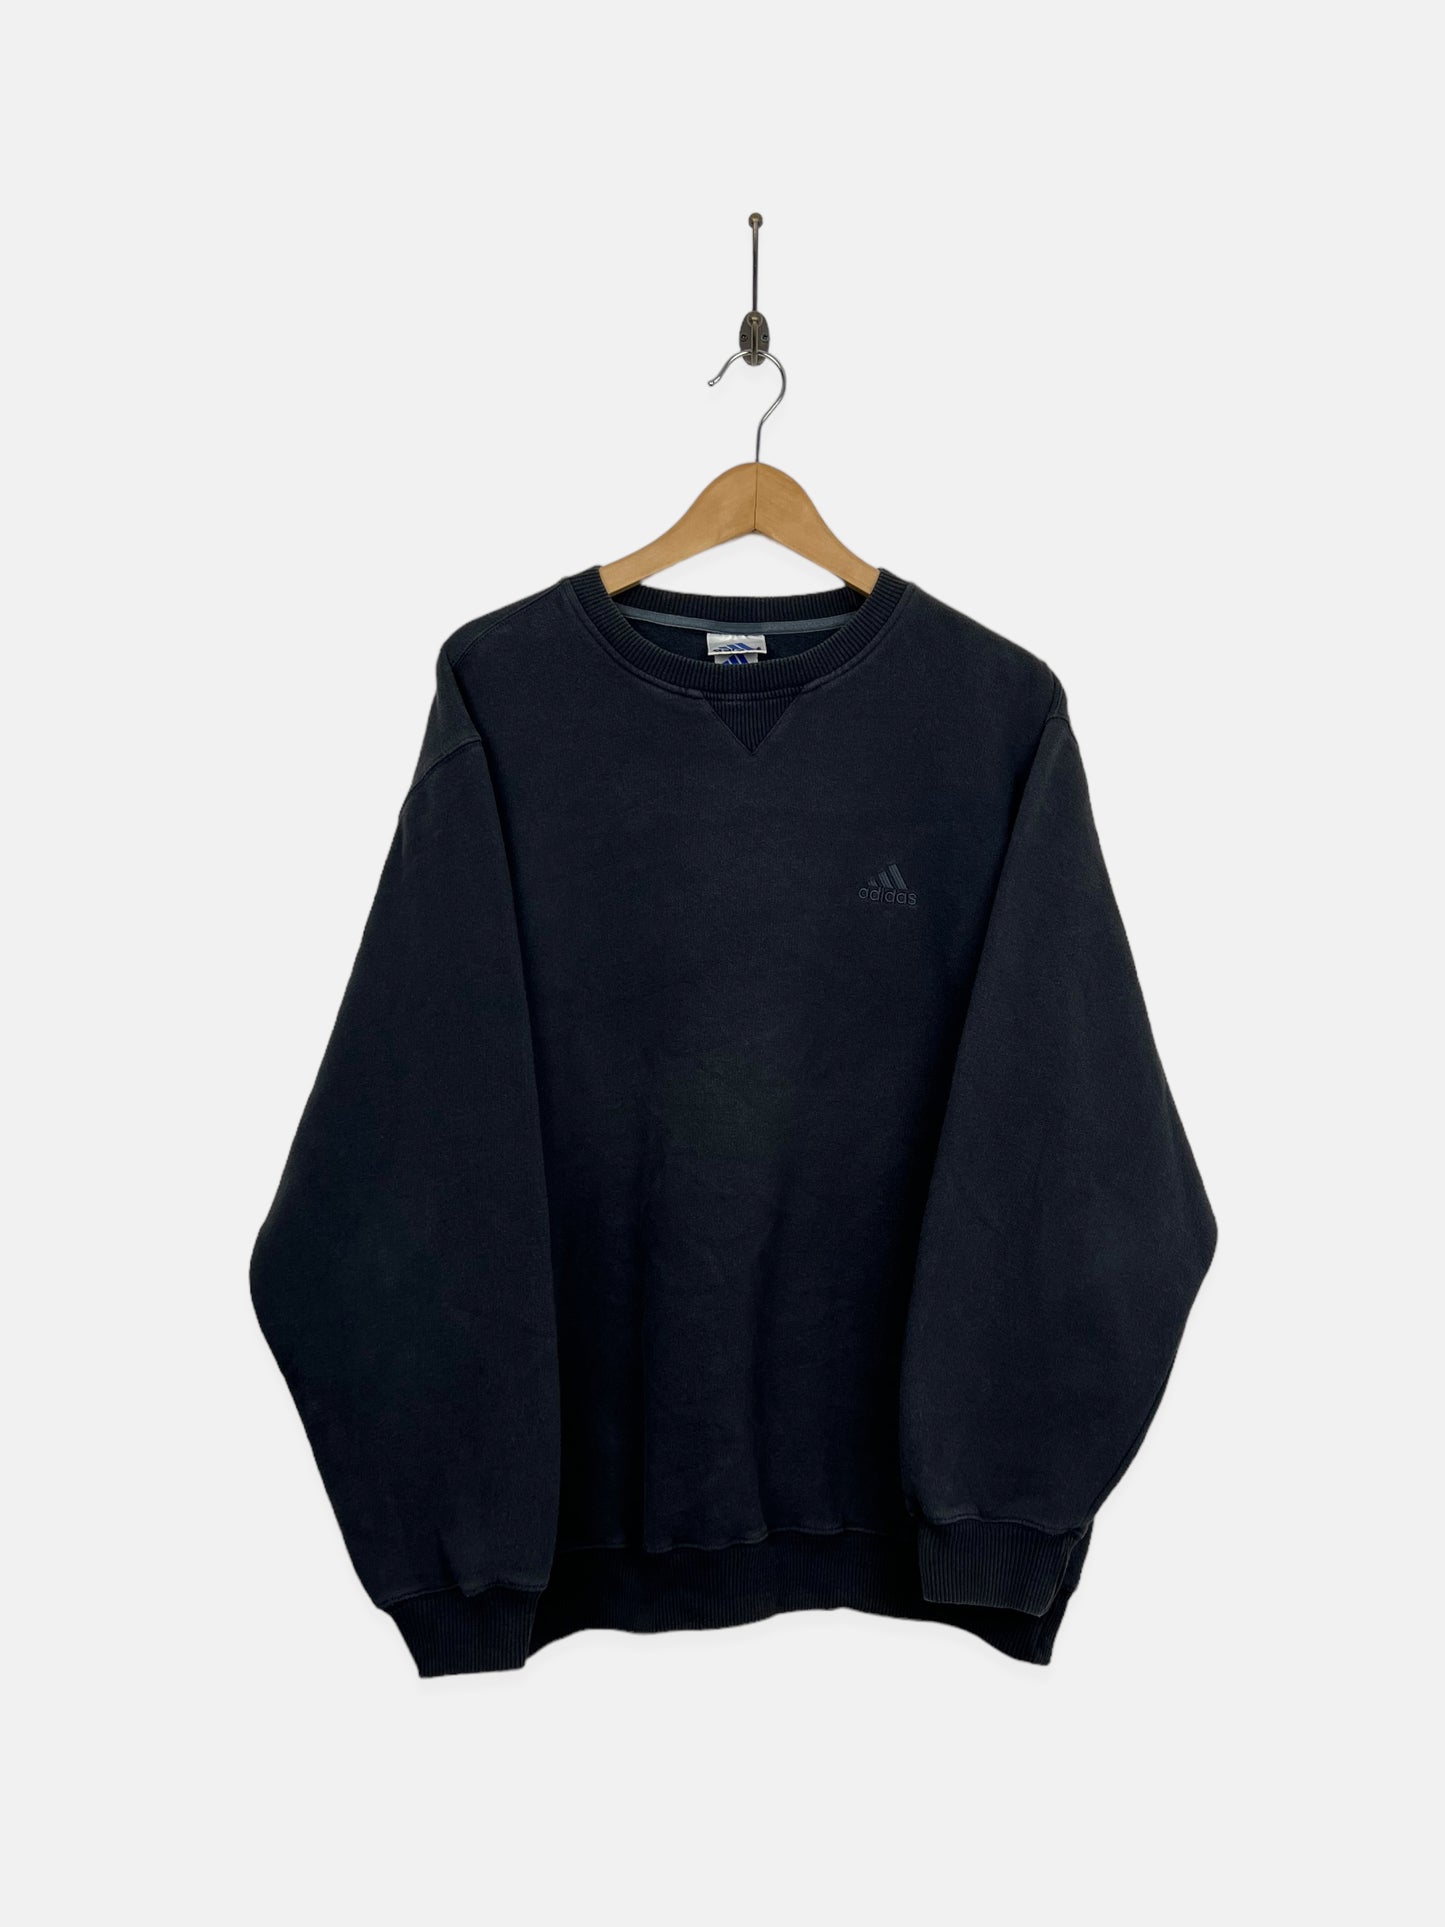 90's Adidas Embroidered Vintage Sweatshirt Size L